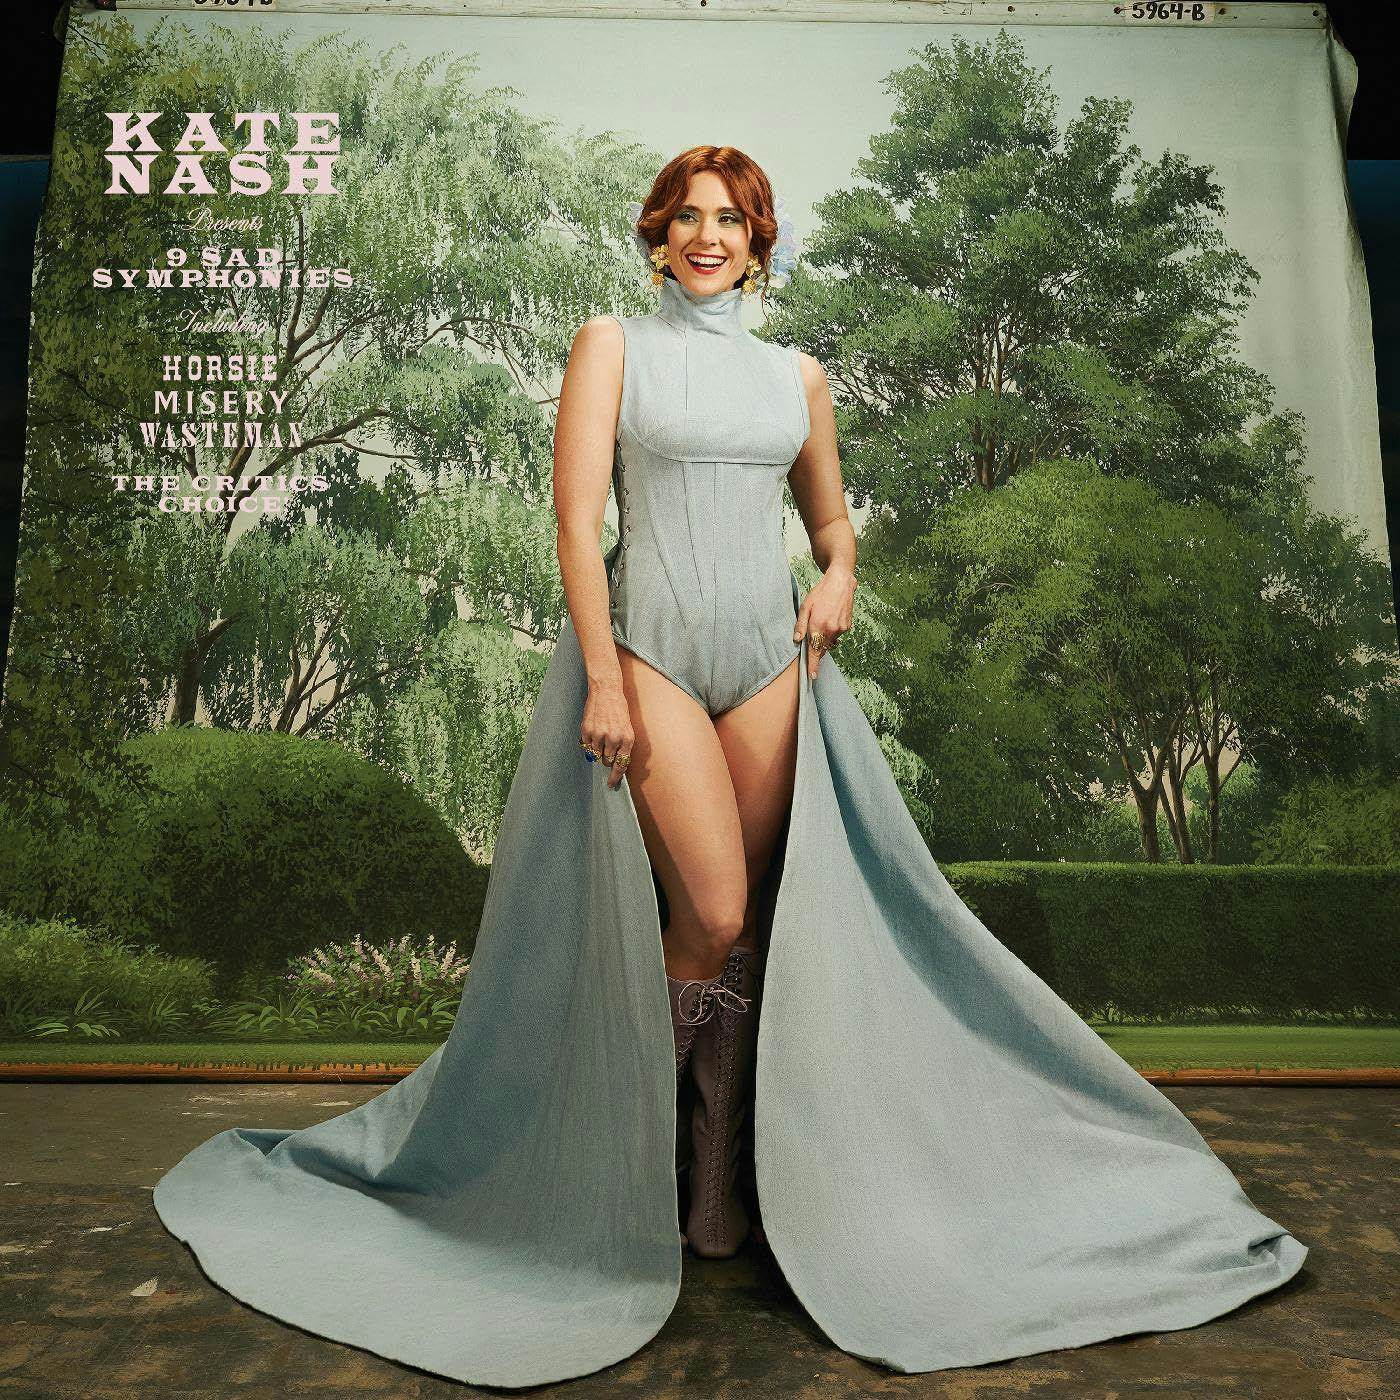 Kate Nash 9 Sad Symphonies (Baby Blue) Vinyl Record